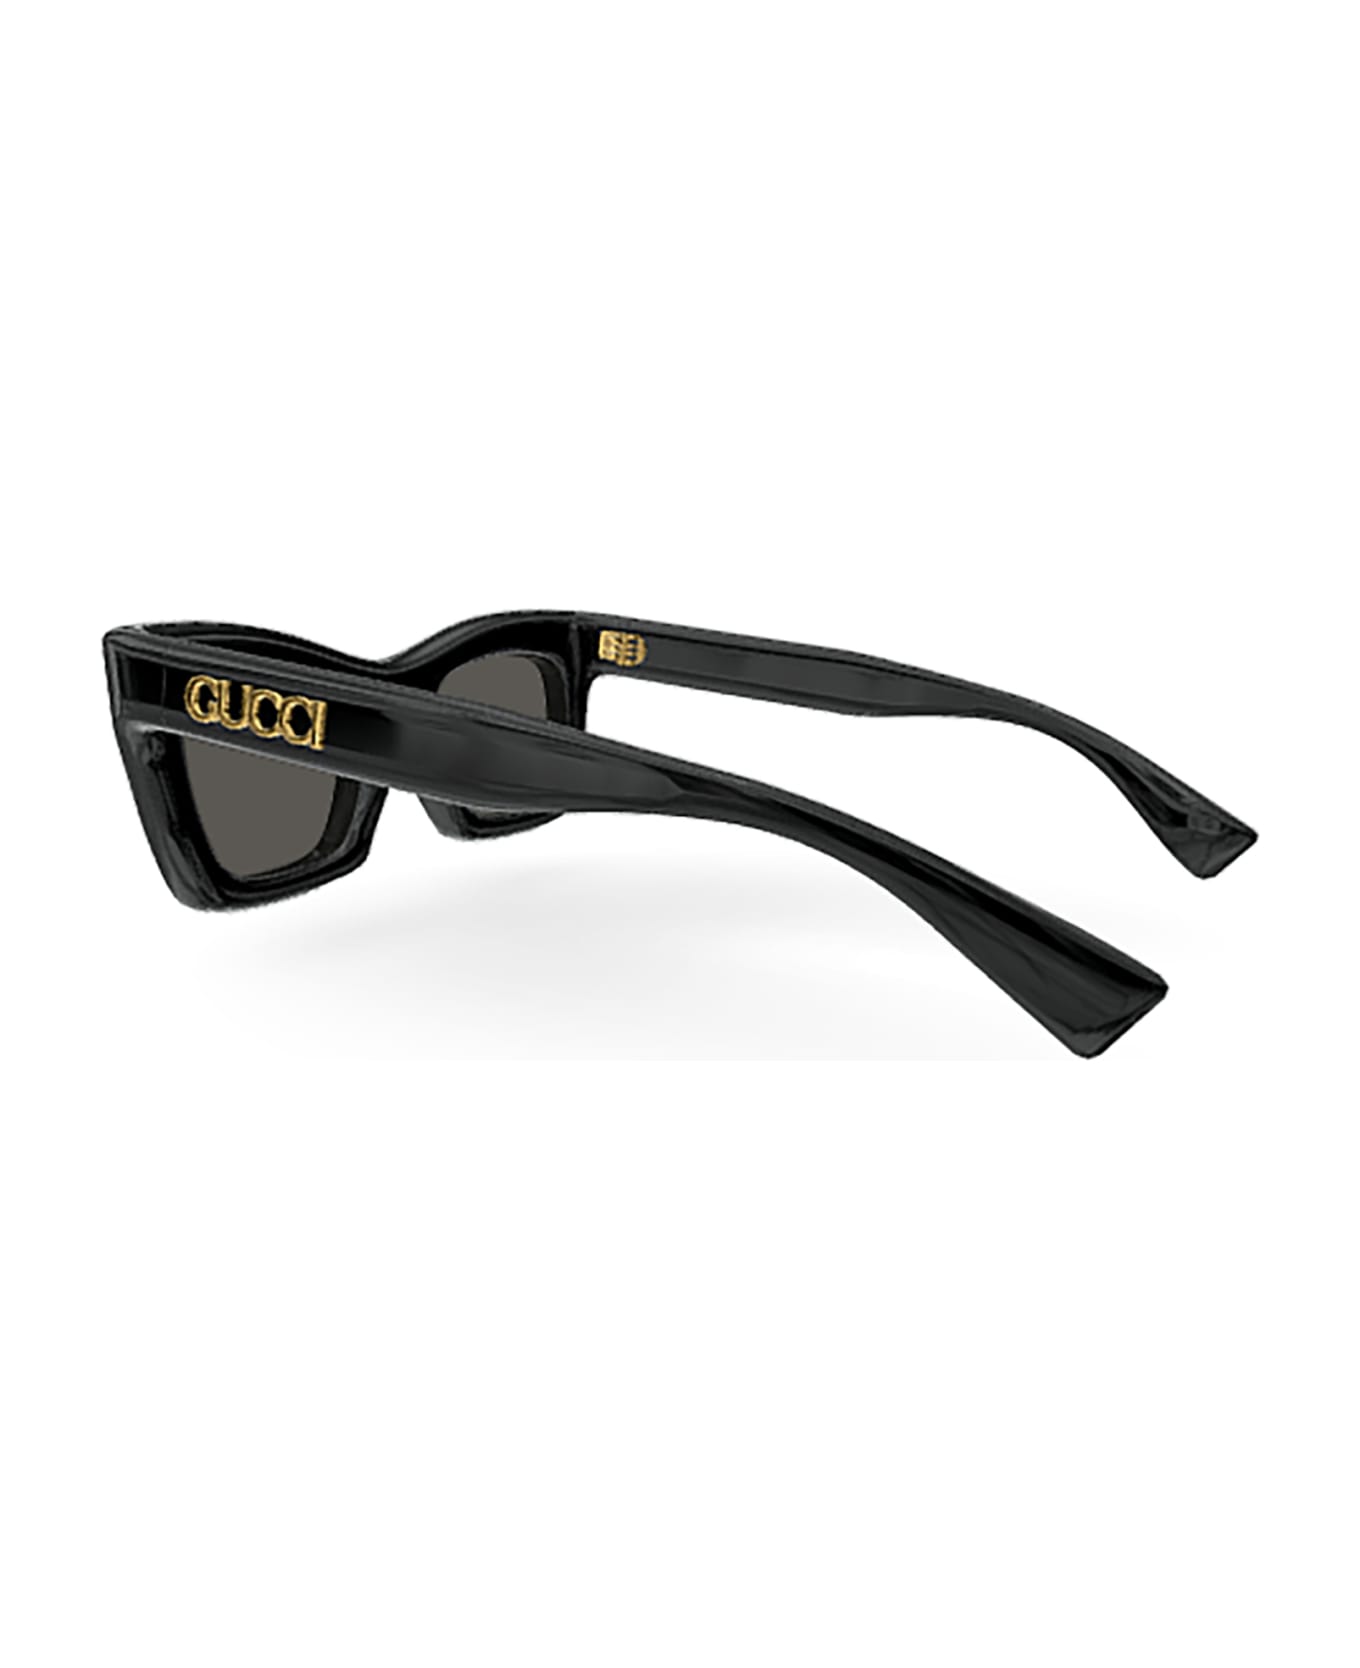 Gucci Eyewear GG1773S Sunglasses - Black Black Grey